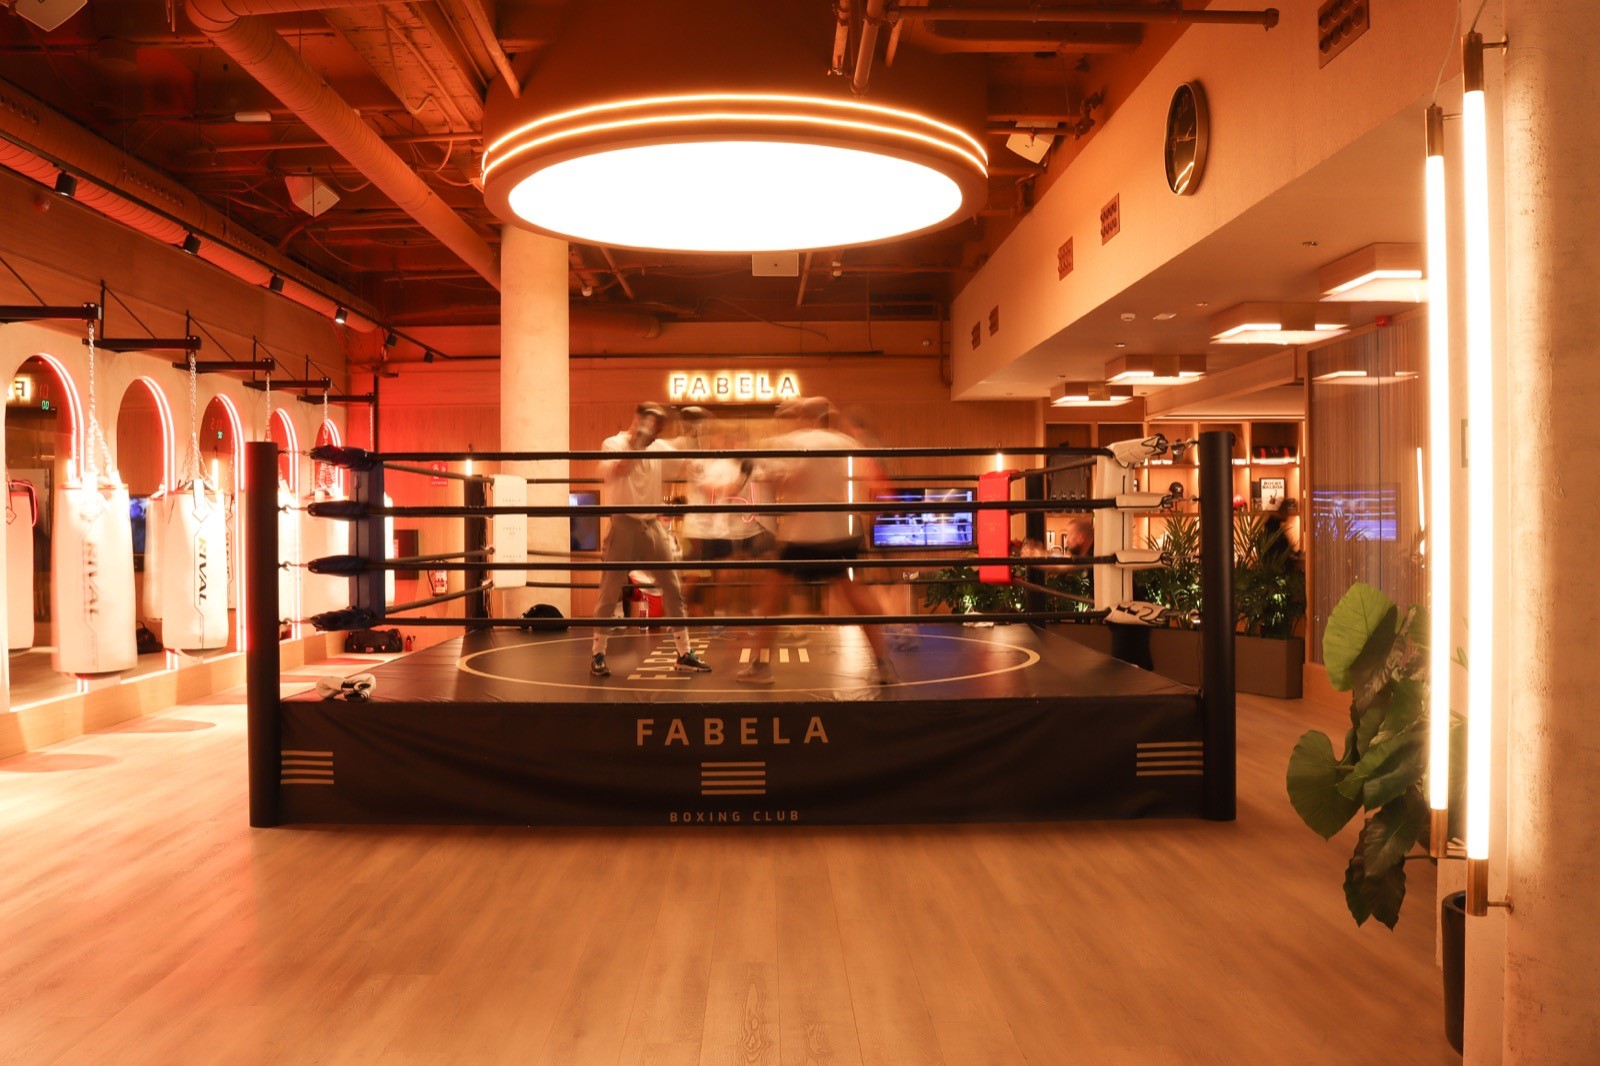 Fabela Boxing Club prevé expandirse con ocho aperturas